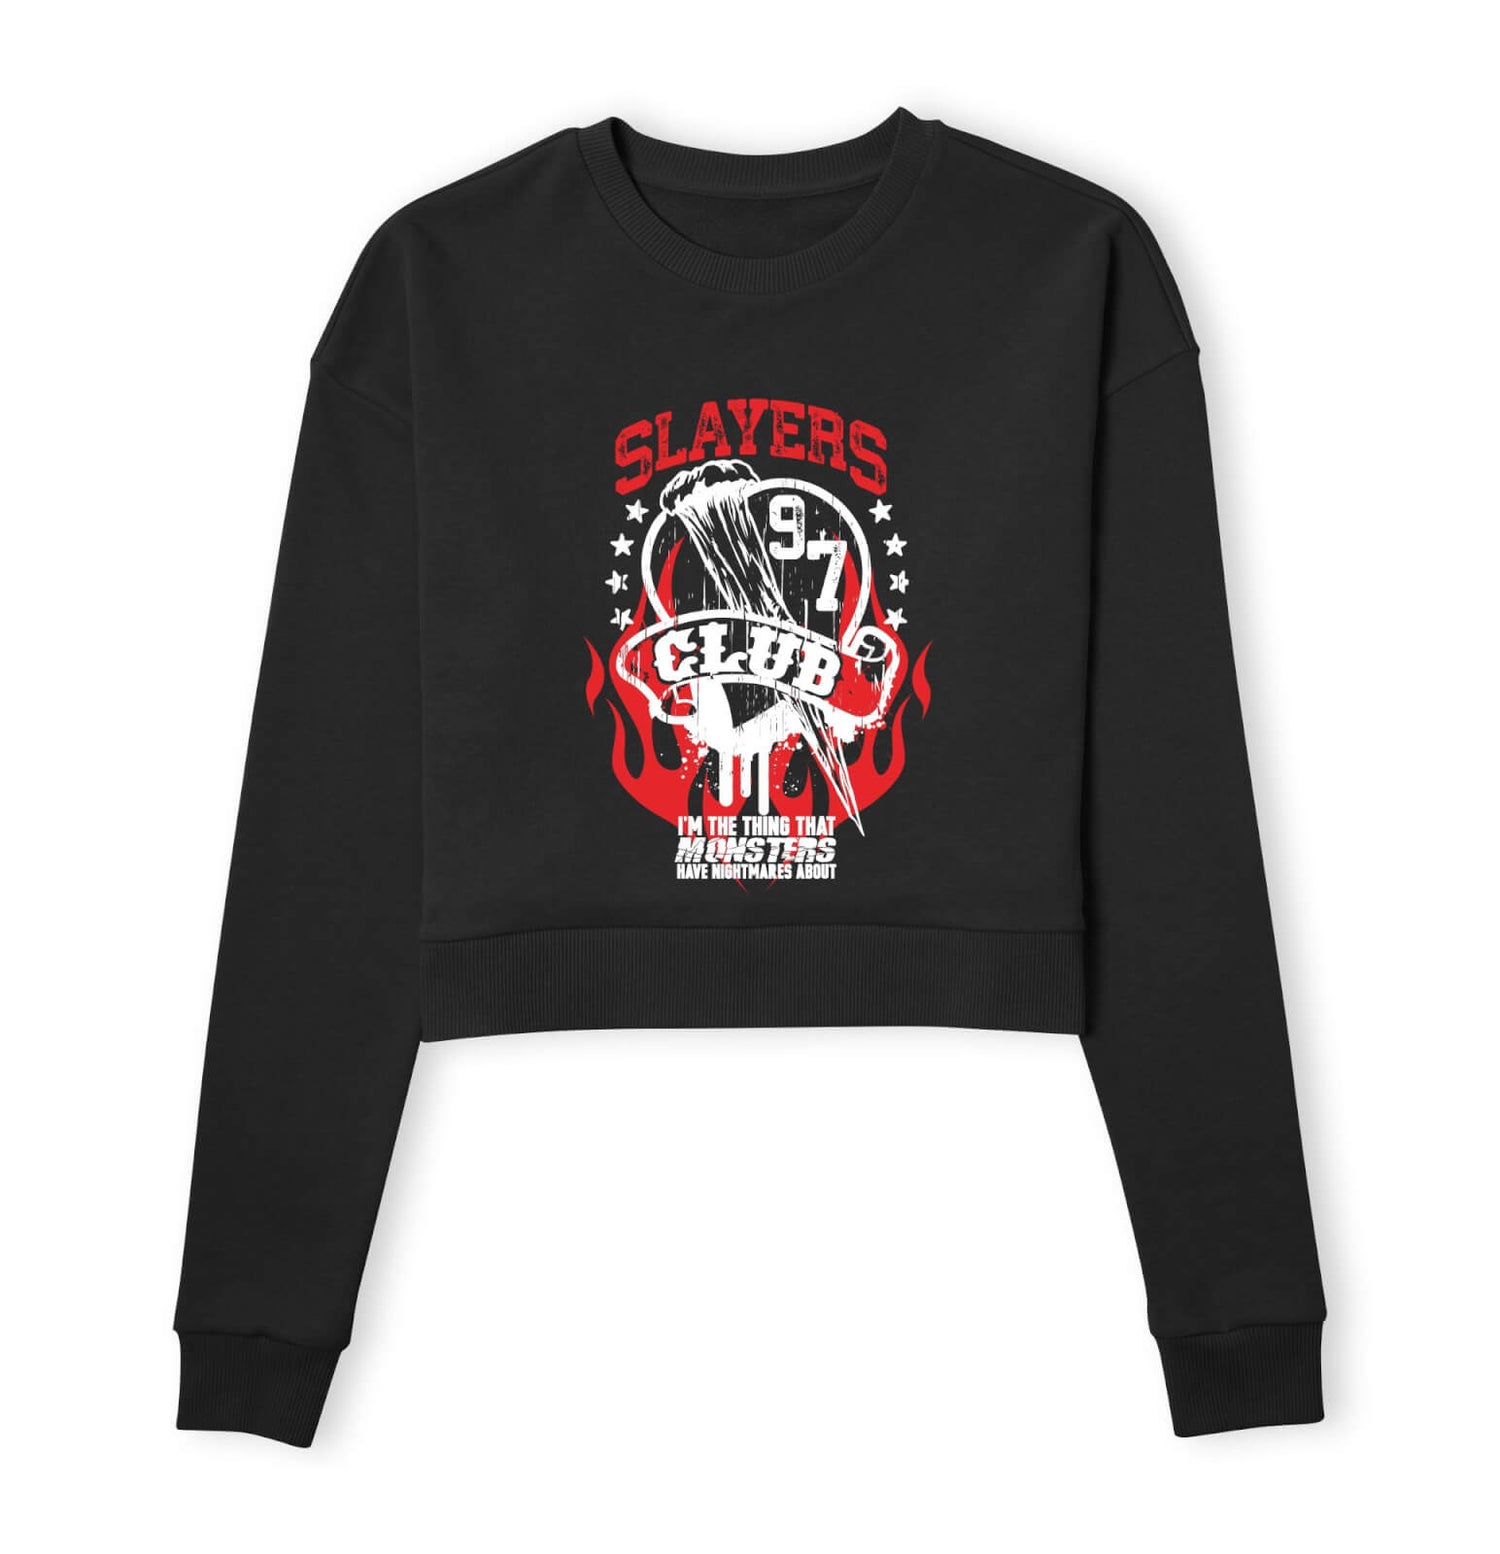 Buffy The Vampire Slayer Slayers Club 97 Women's Cropped Sweatshirt - Black